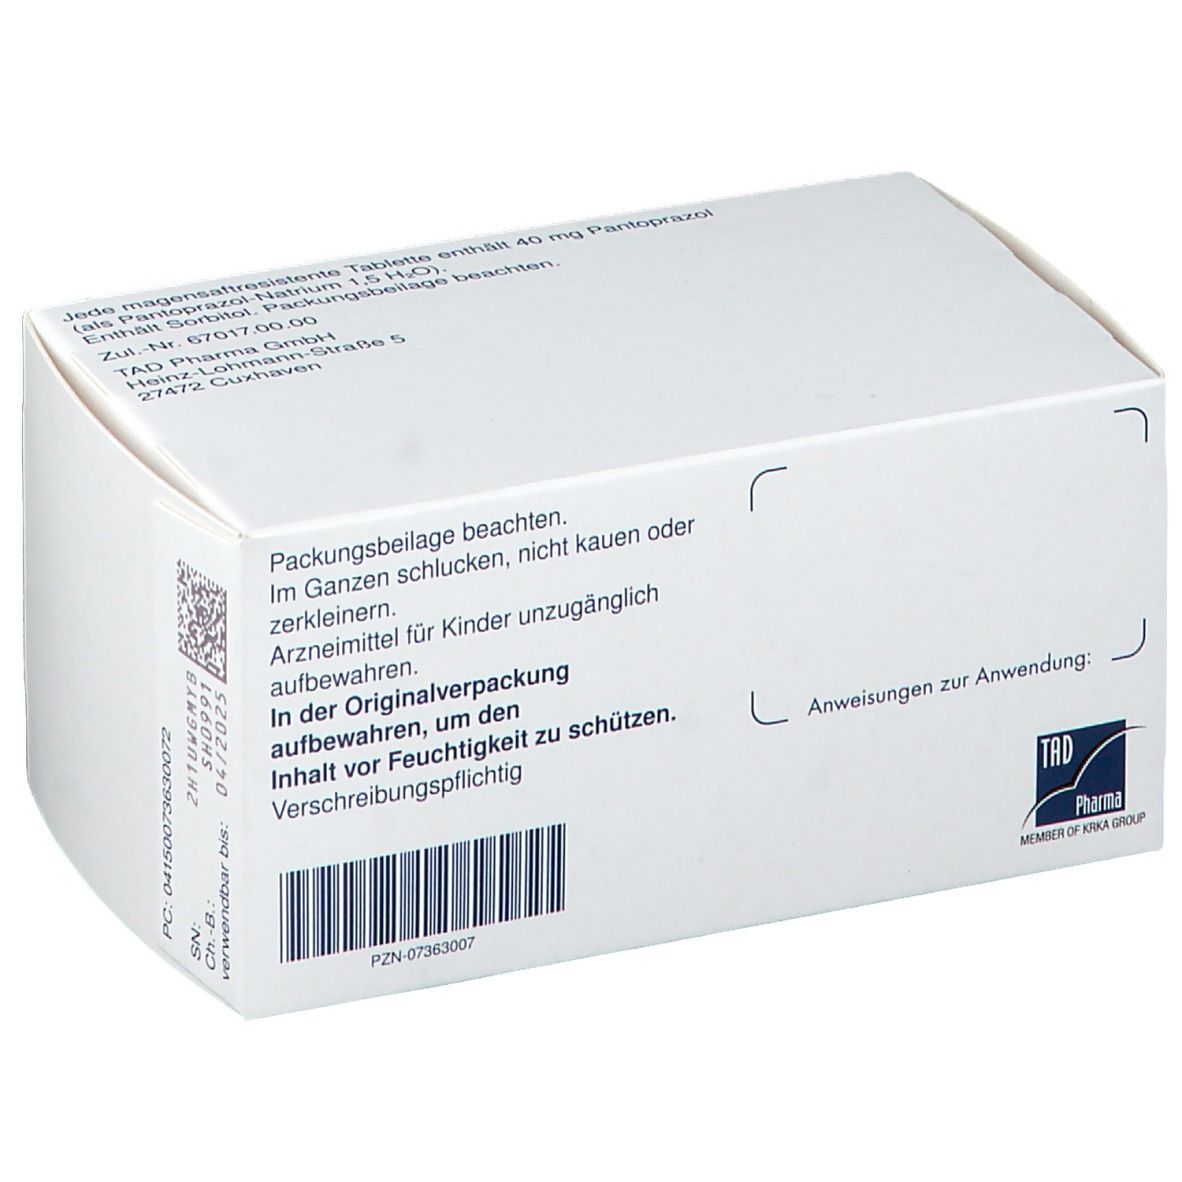 Pantoprazol TAD® 40 mg